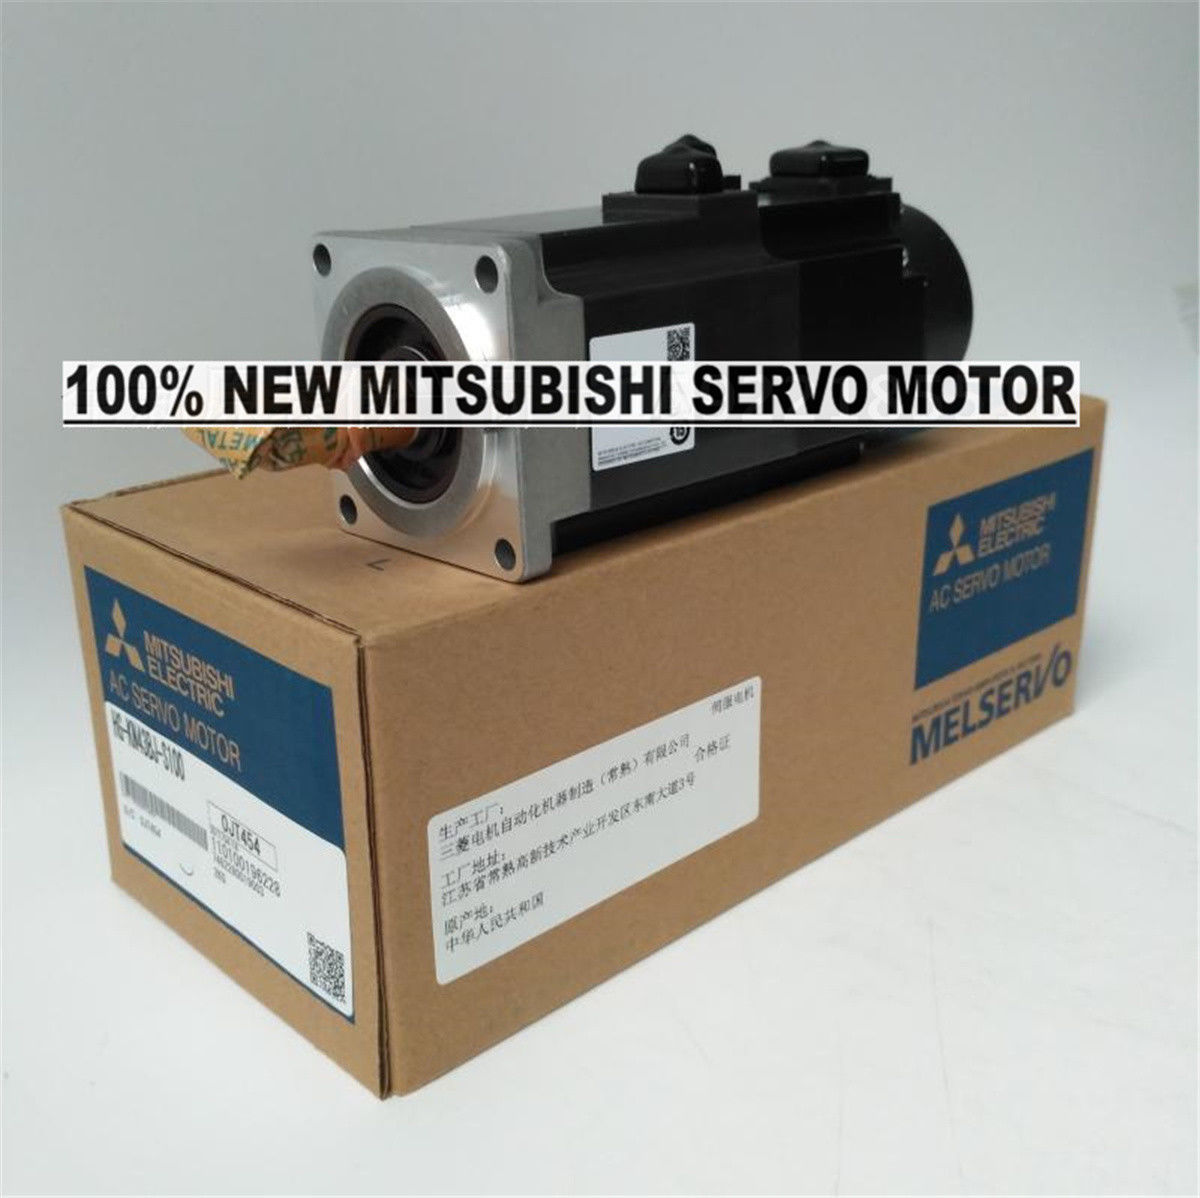 NEW Mitsubishi Servo Motor HG-KN43BJ-S100 in box HGKN43BJS100 - Click Image to Close